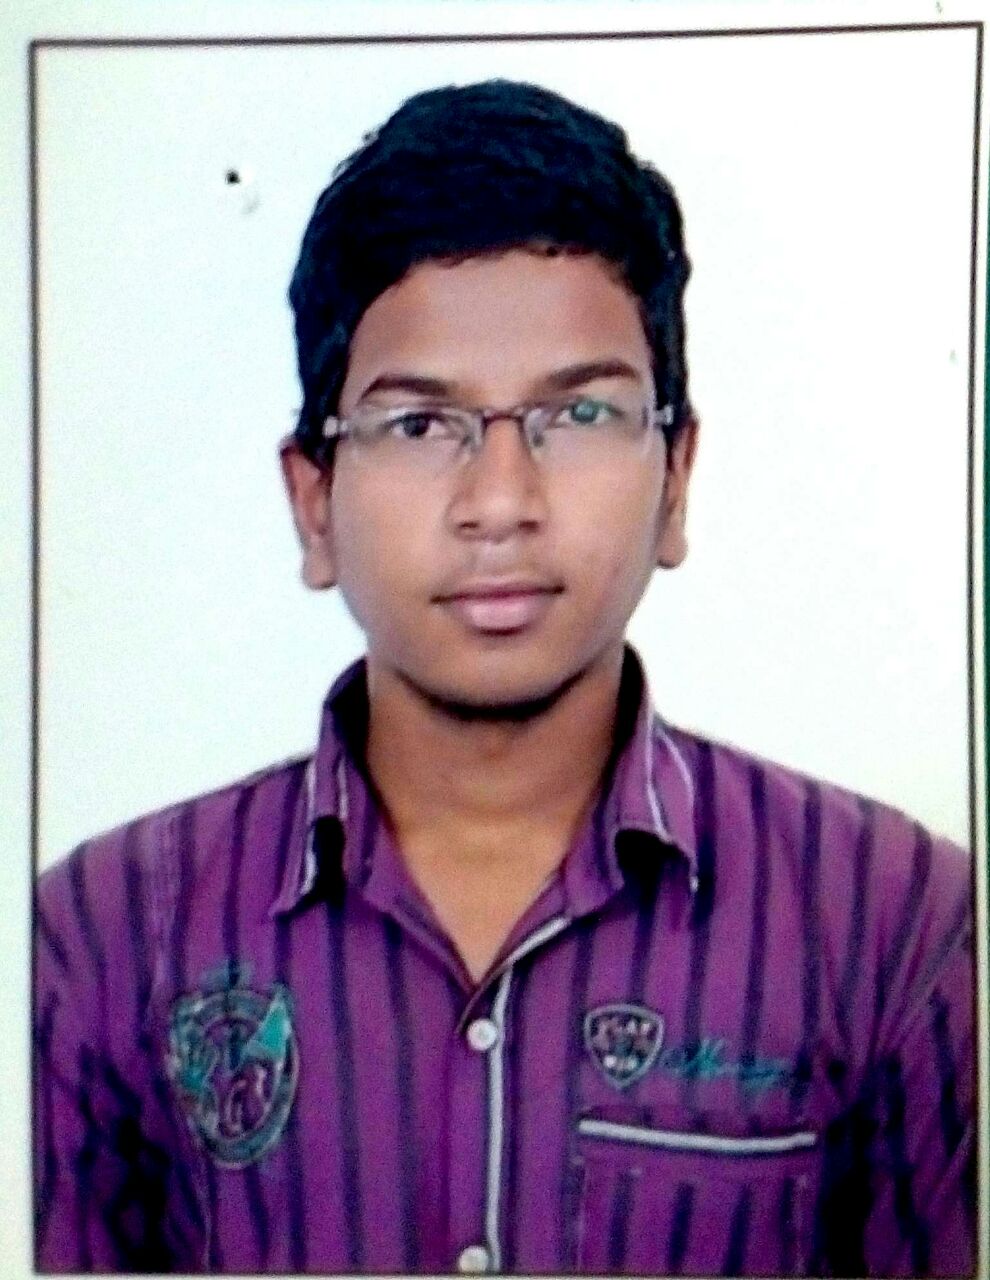 Student Image